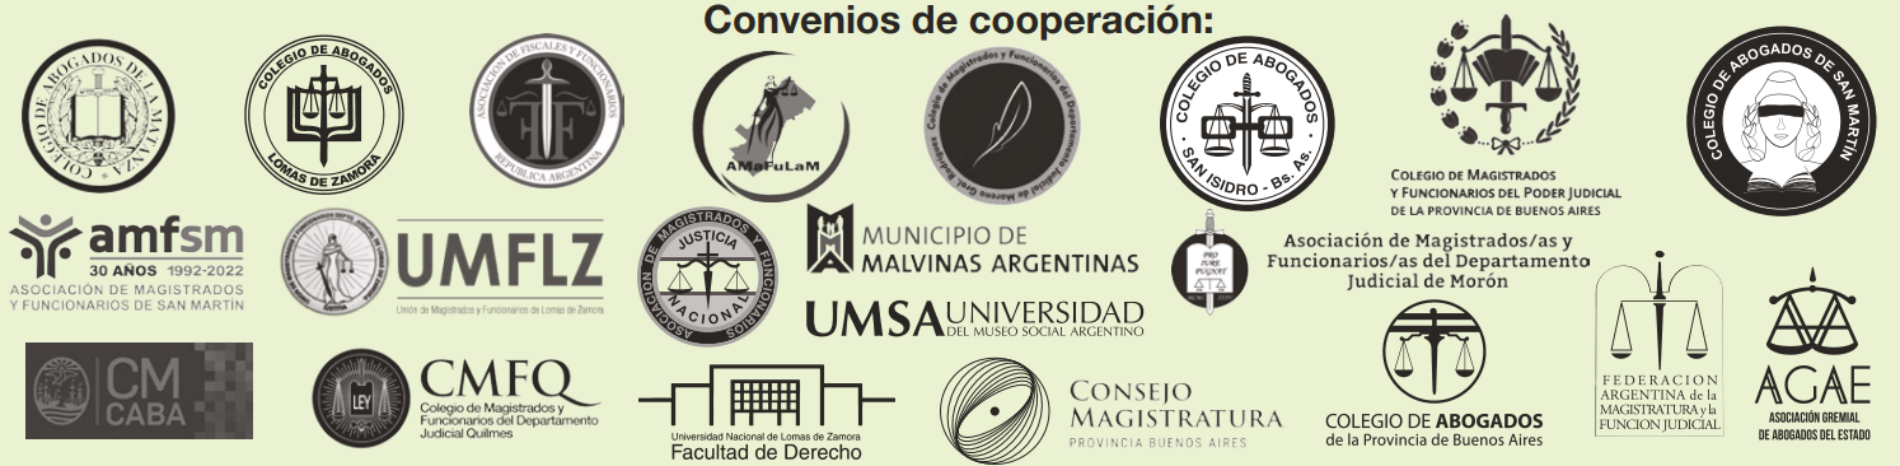 Convenios de cooperación entre FUNDEJUS e instituciones colaboradoras.